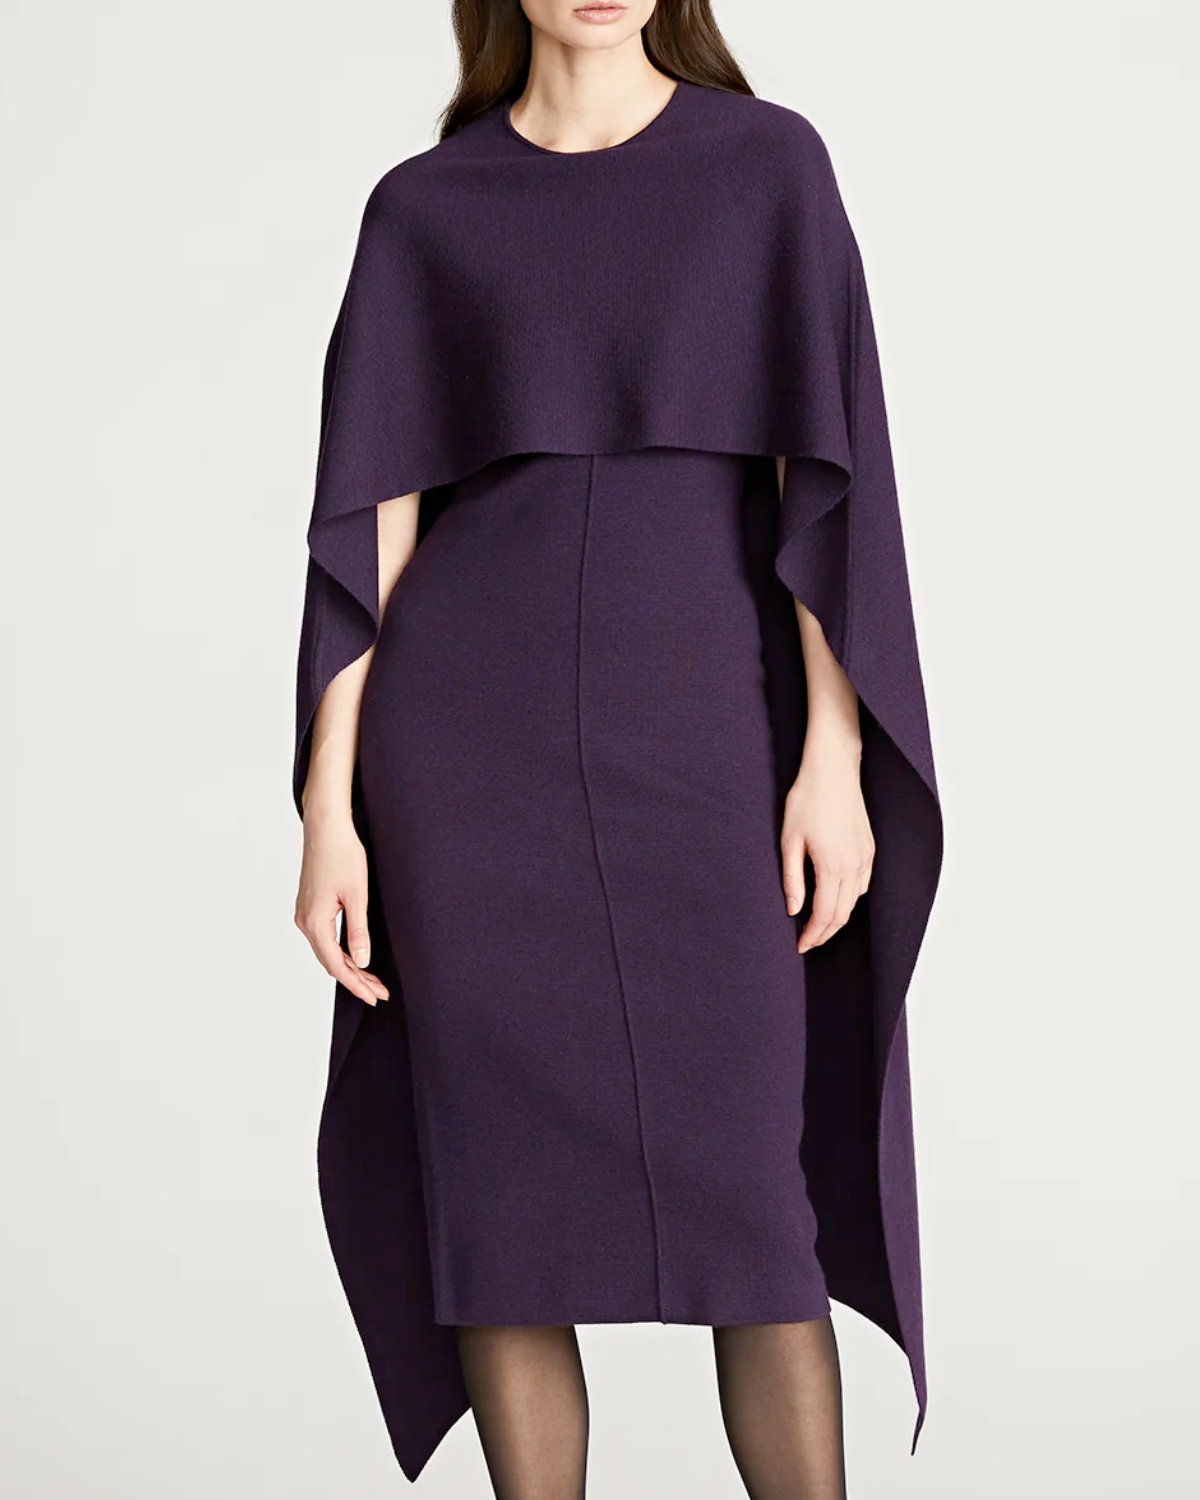 Amal Sweater Dress in Wool (Aubergine)